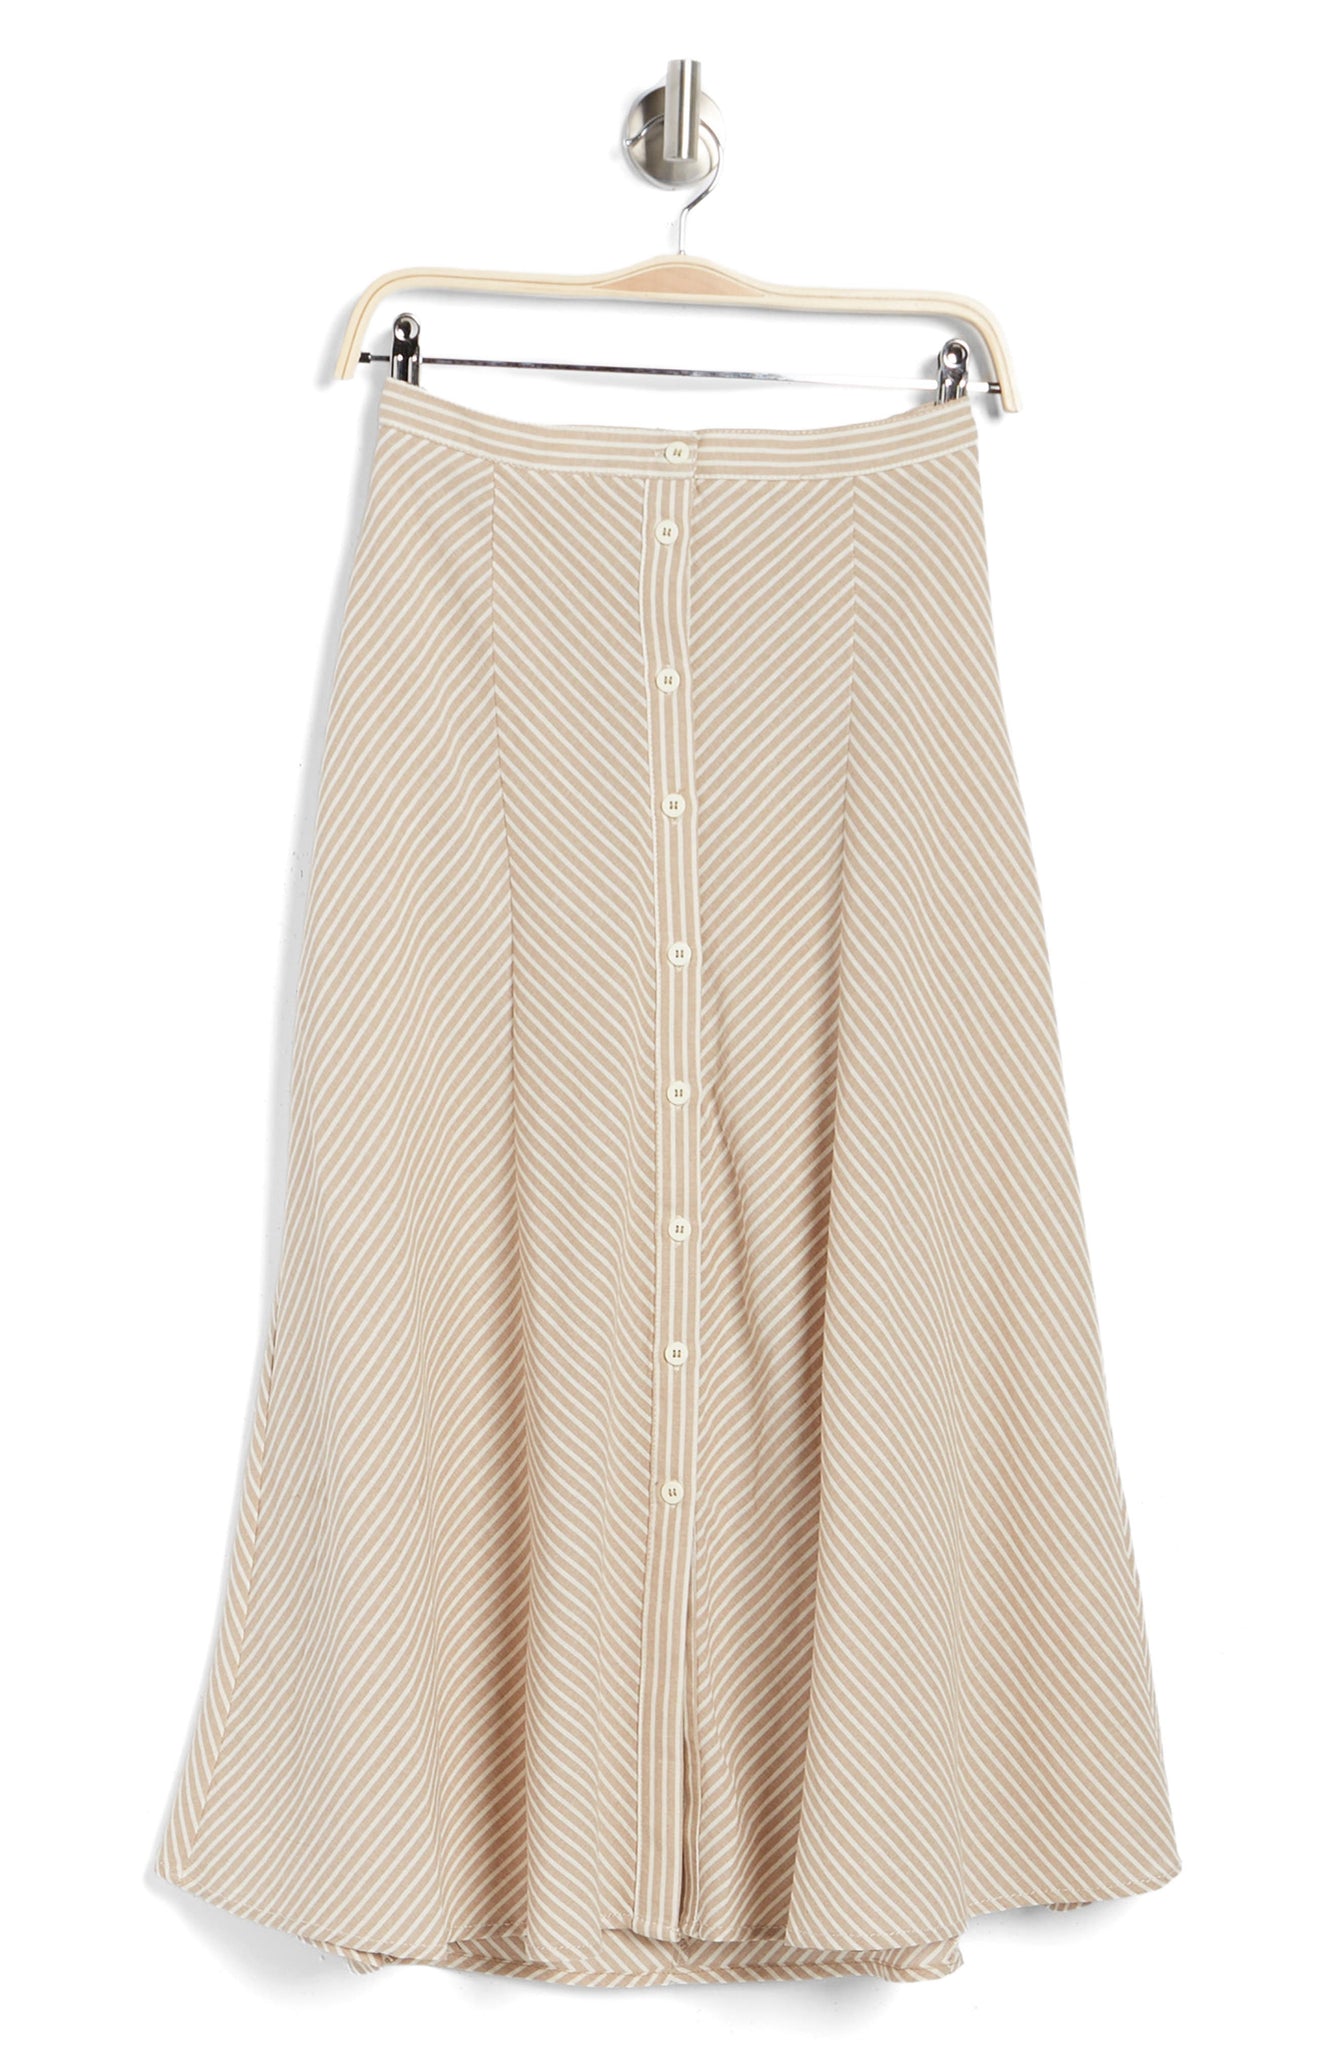 MAX STUDIO Stripe Button Front Cotton Skirt, Alternate, color, KHAKI/ WHITE STRIPE